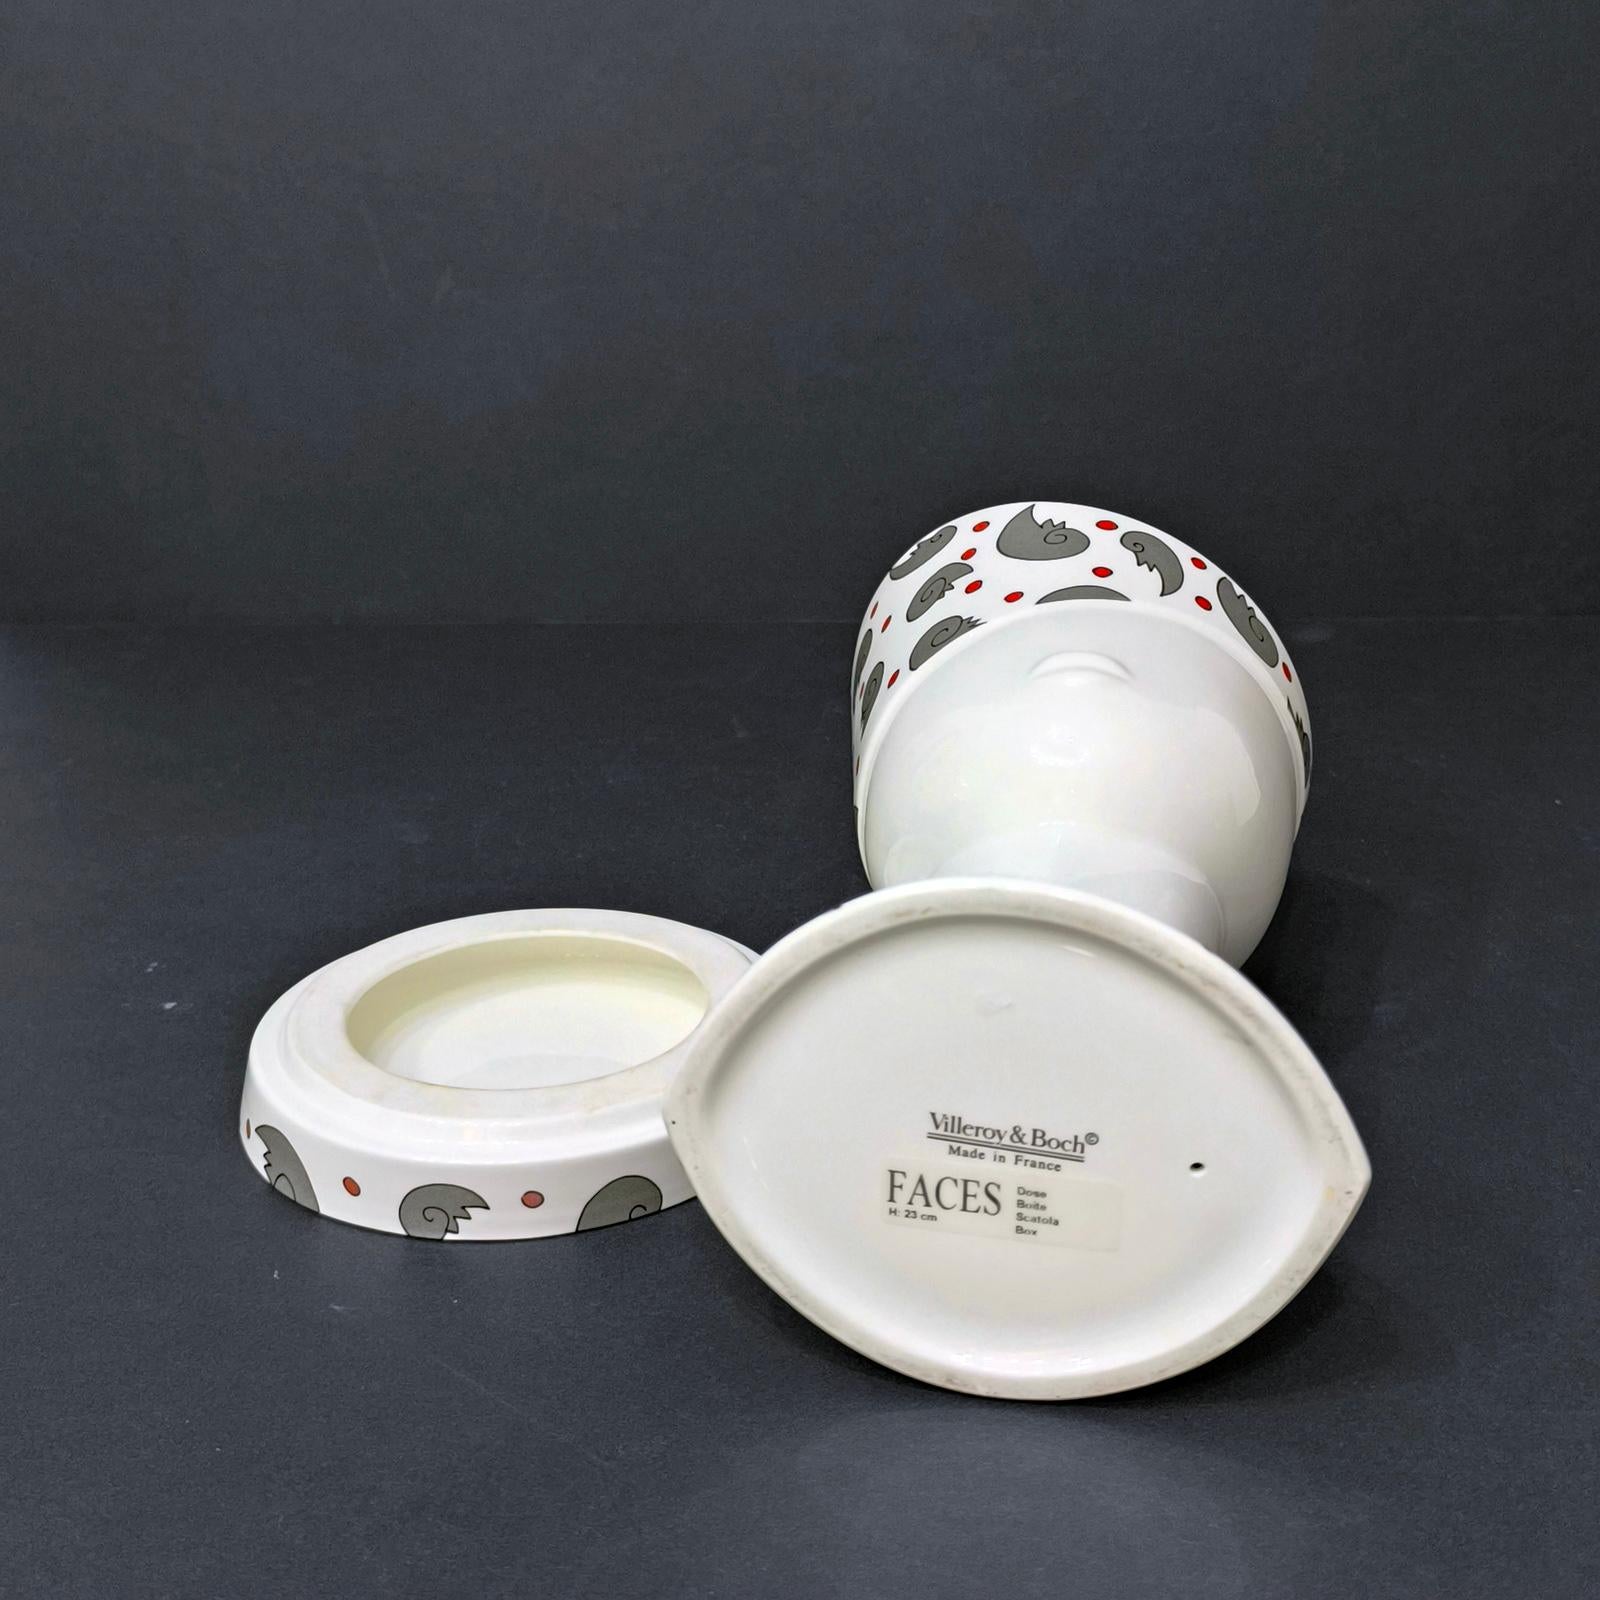 Porcelain Rare Vintage Villeroy & Boch Lidded Box of the Series Faces France, 1980s For Sale